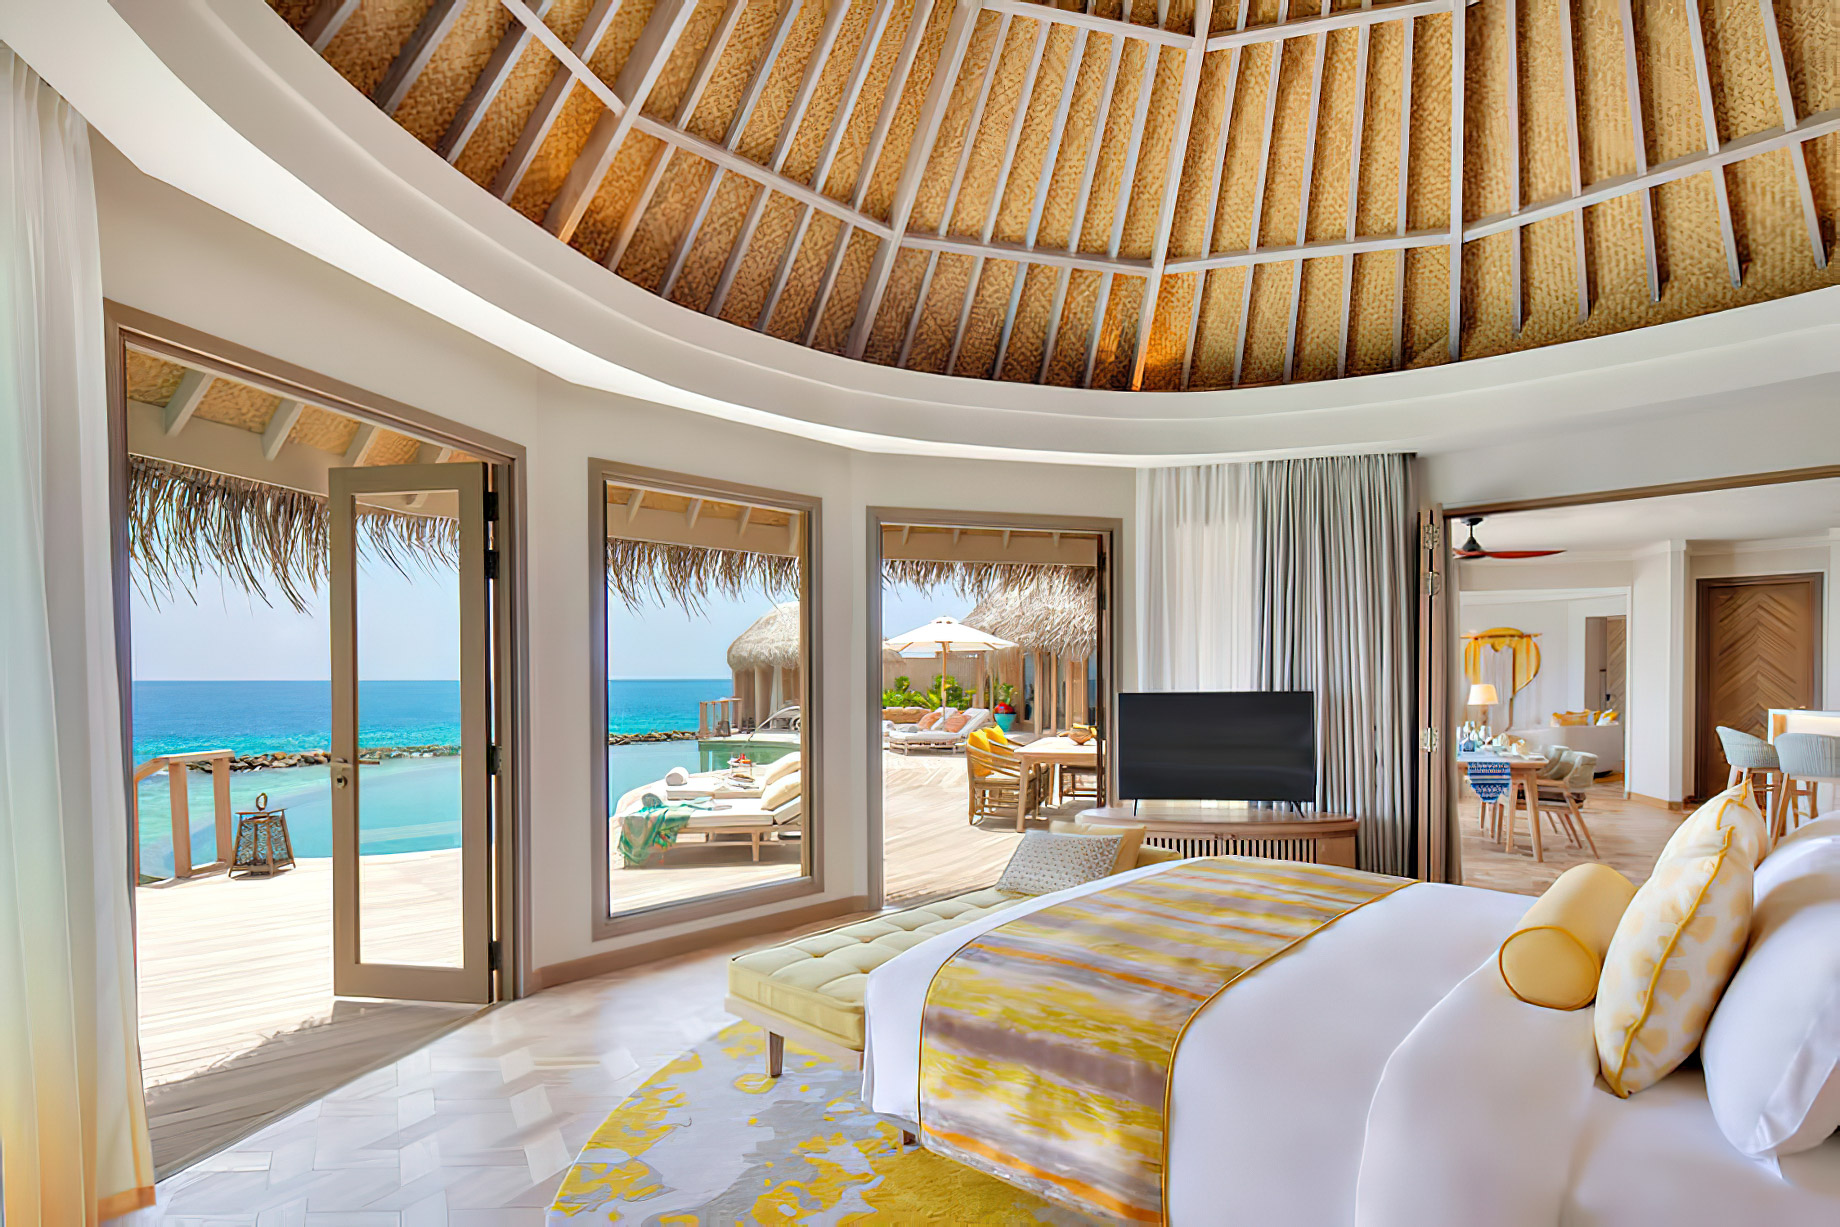 The Nautilus Maldives Resort - Thiladhoo Island, Maldives - The Nautilus Retreat Master Bedroom